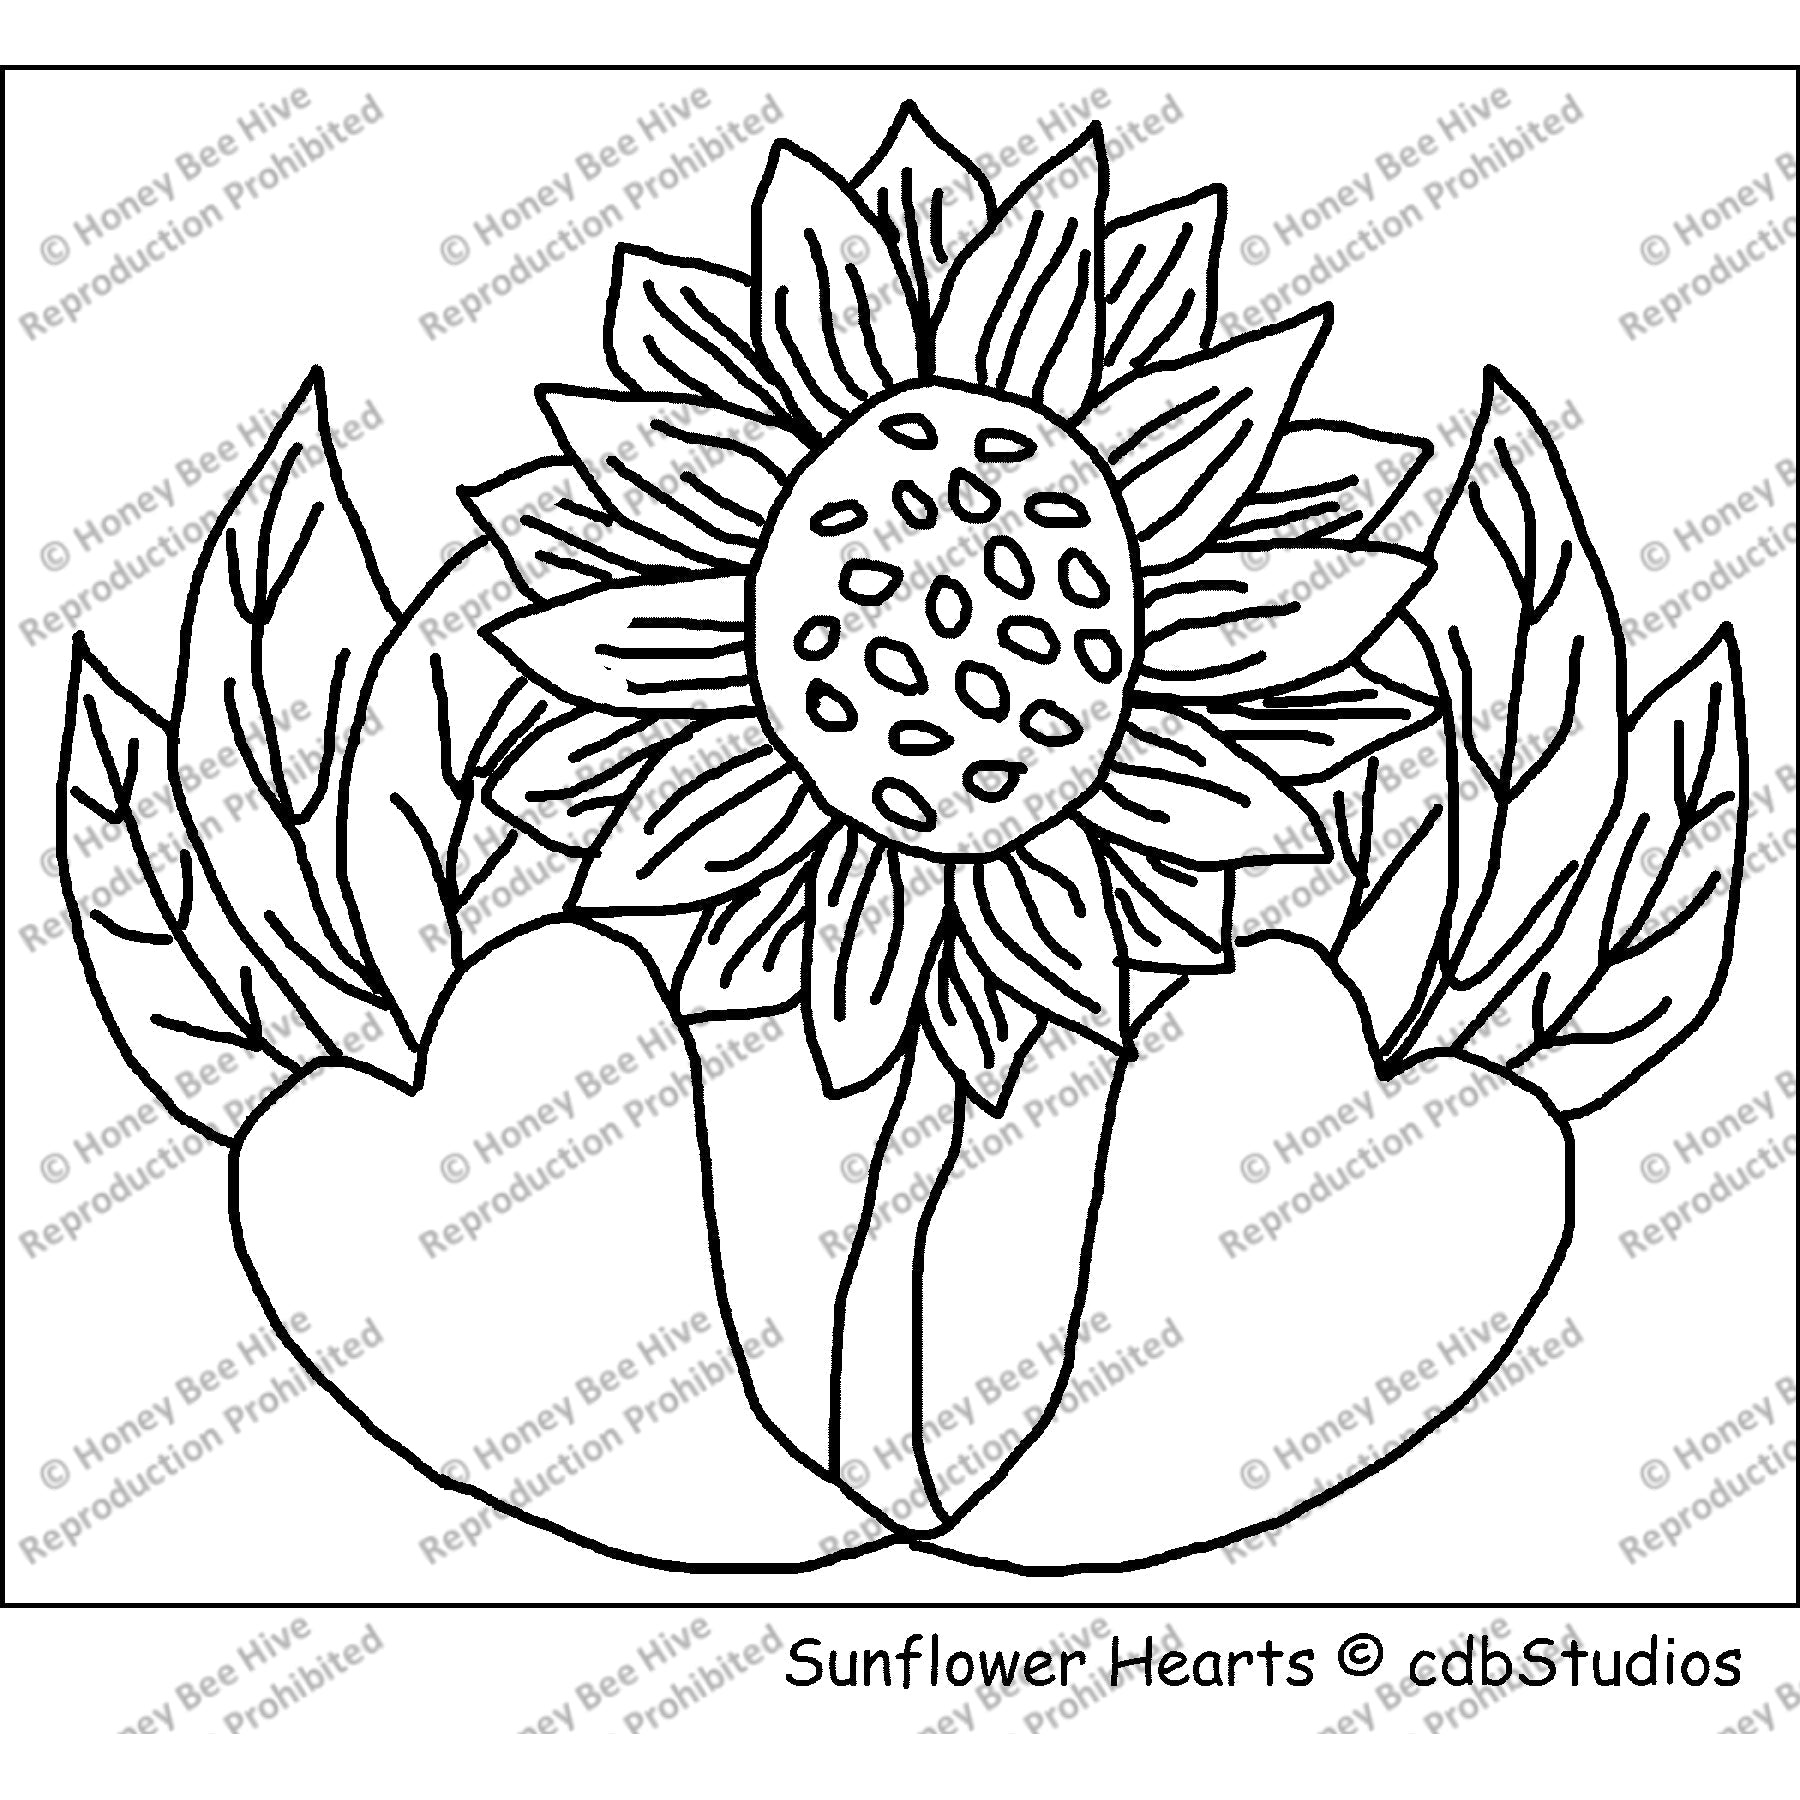 Sunflower Hearts, rug hooking pattern